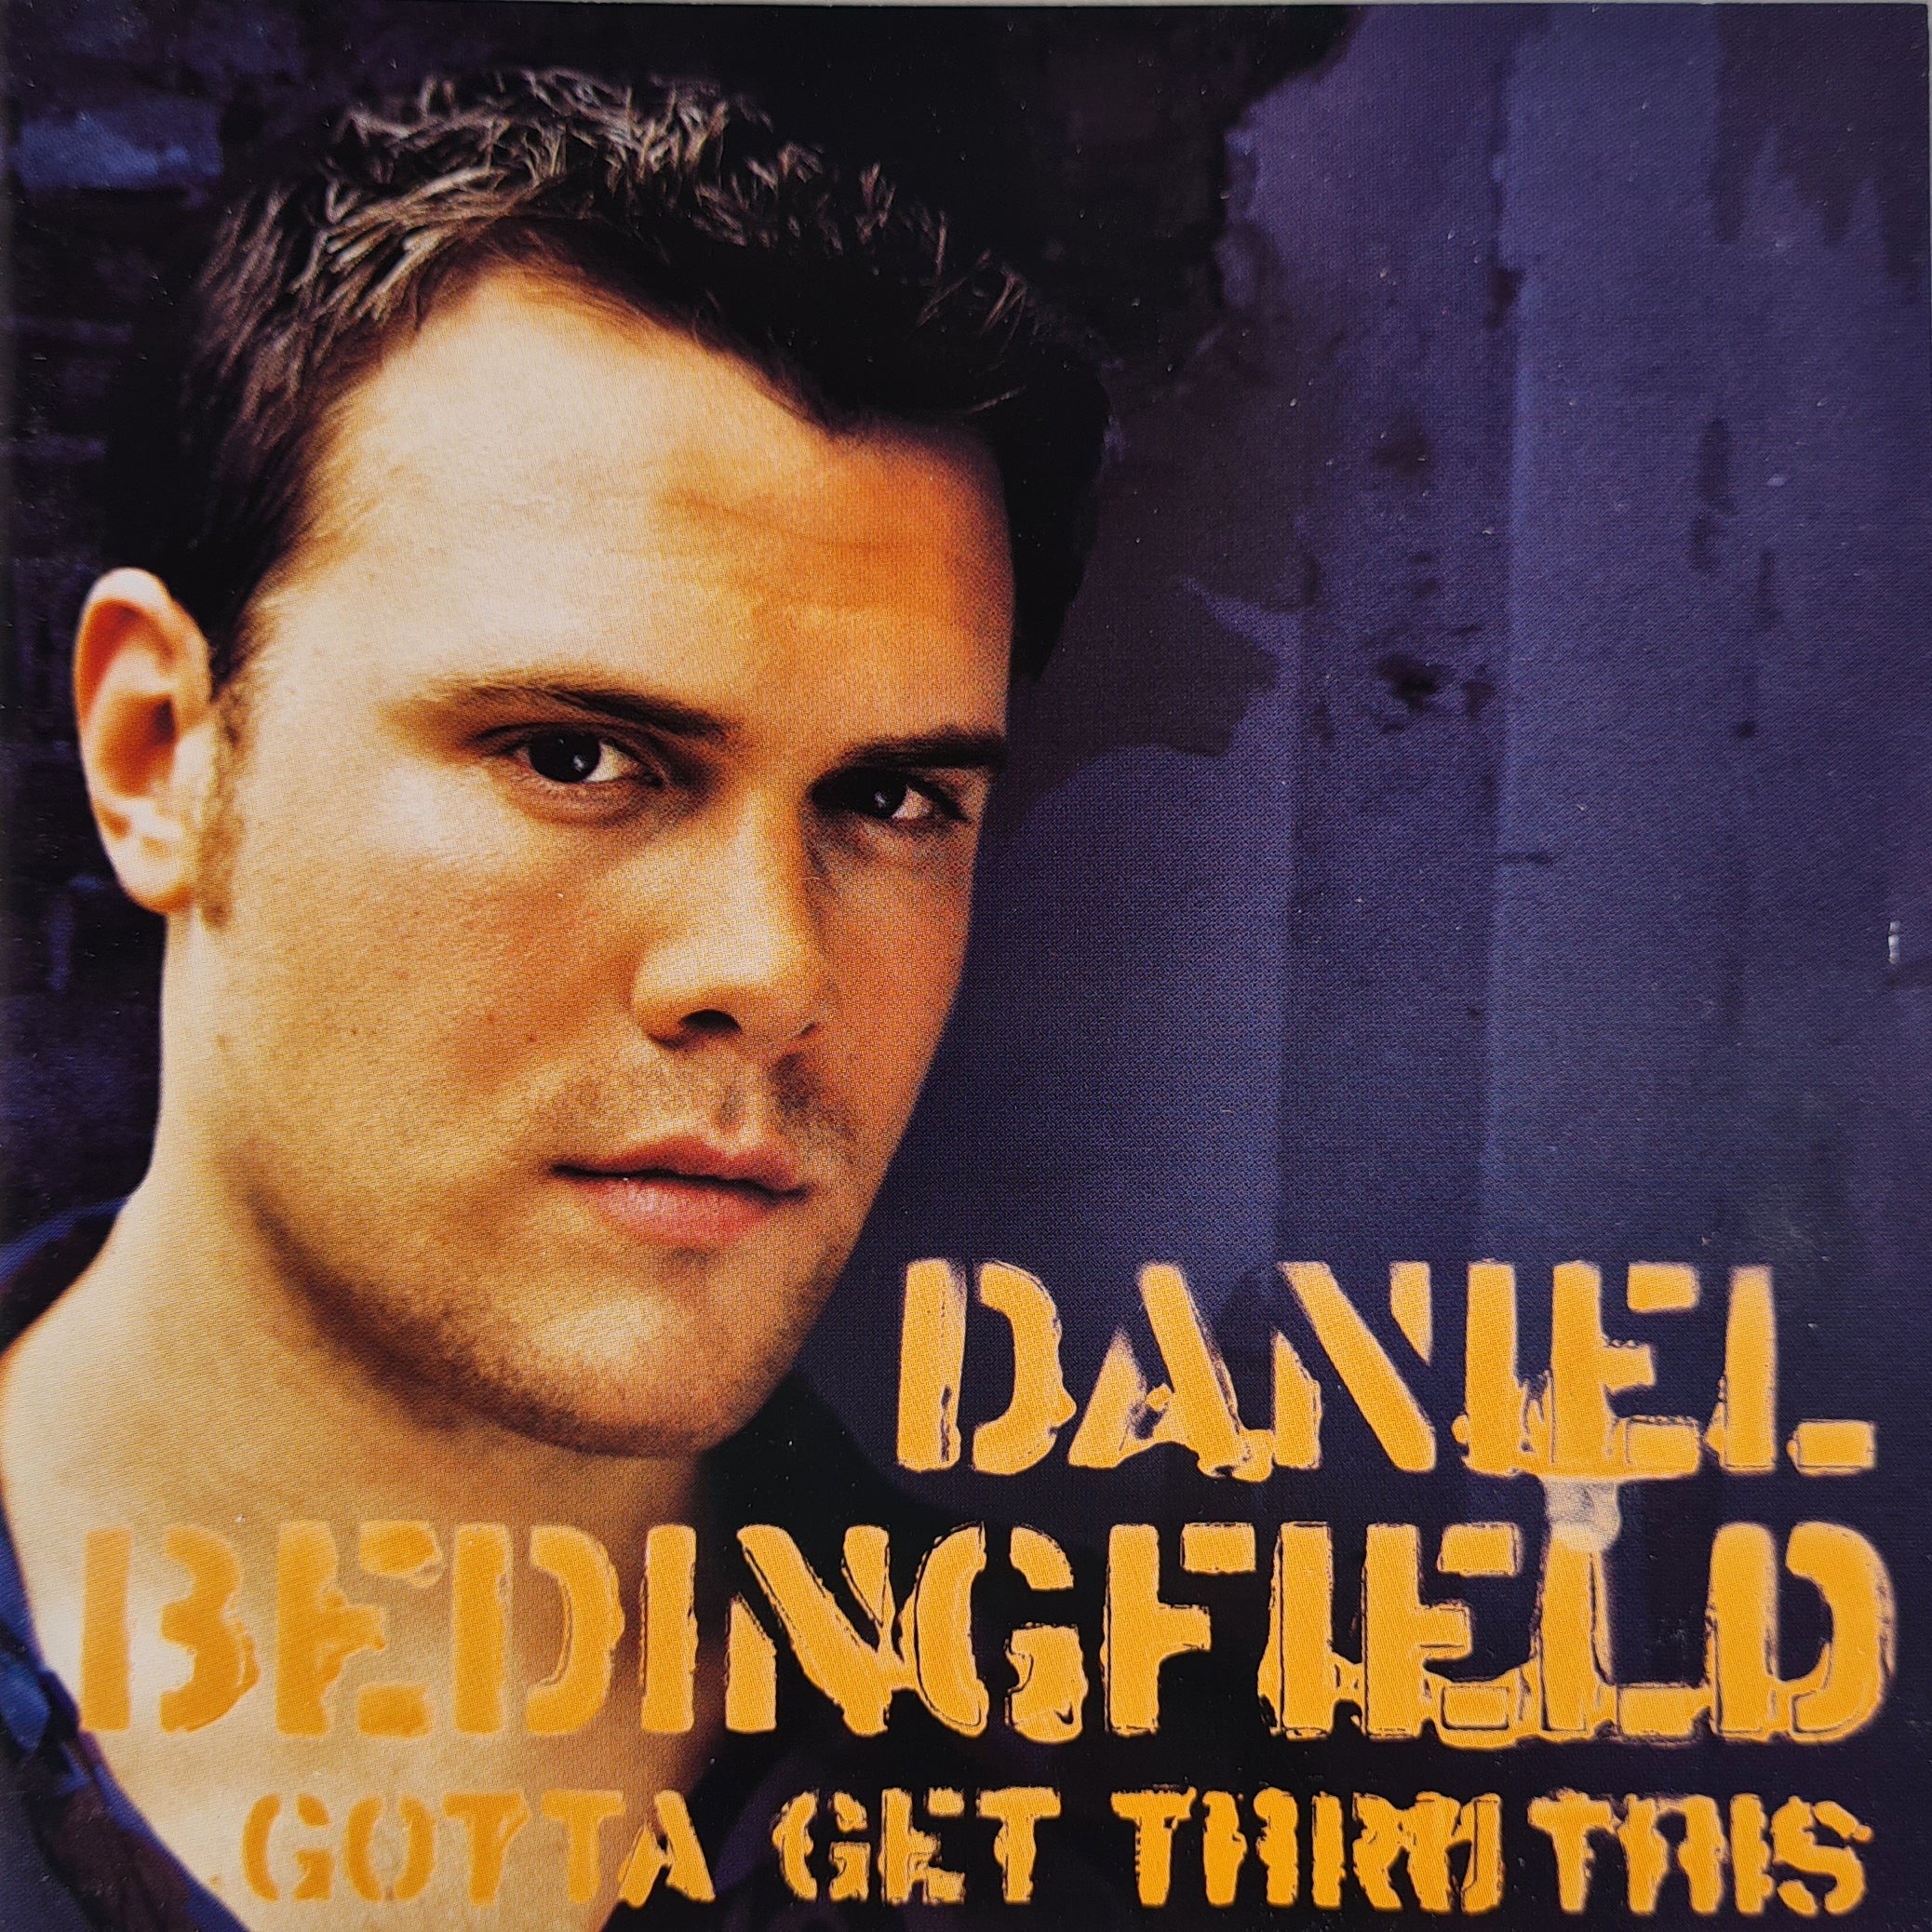 Daniel Bedingfield - Gotta Get Through This (CD)